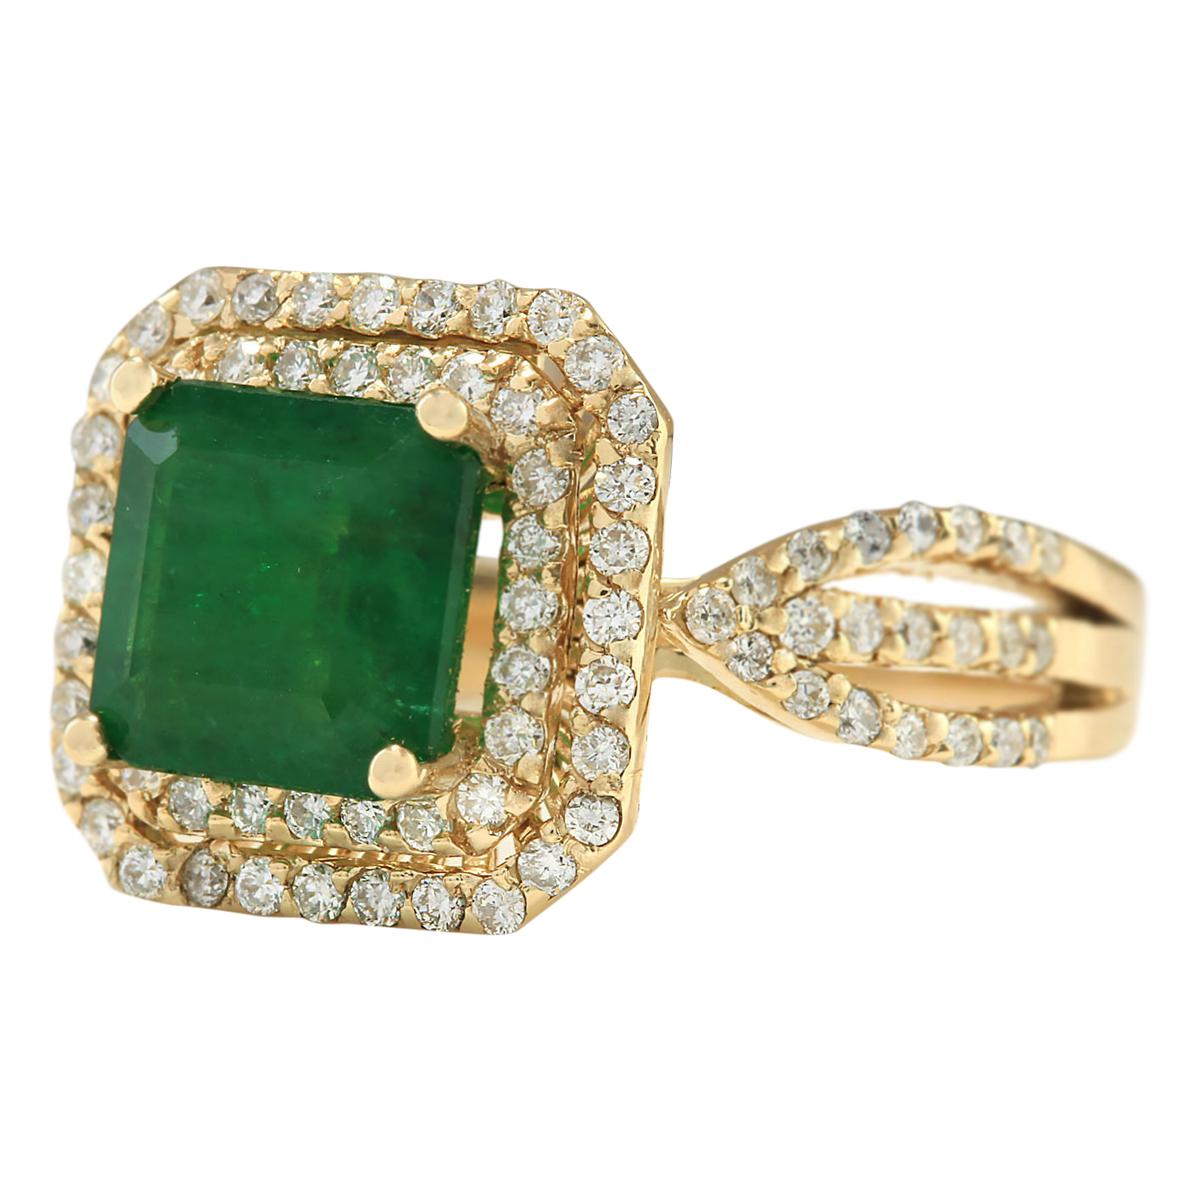 3.13 Carat Natural Emerald 14 Karat Yellow Gold Diamond Ring
Stamped: 14K Yellow Gold
Total Ring Weight: 6.0 Grams
Total Natural Emerald Weight is 2.43 Carat (Measures: 7.50x7.50 mm)
Color: Green
Total Natural Diamond Weight is 0.70 Carat
Color: